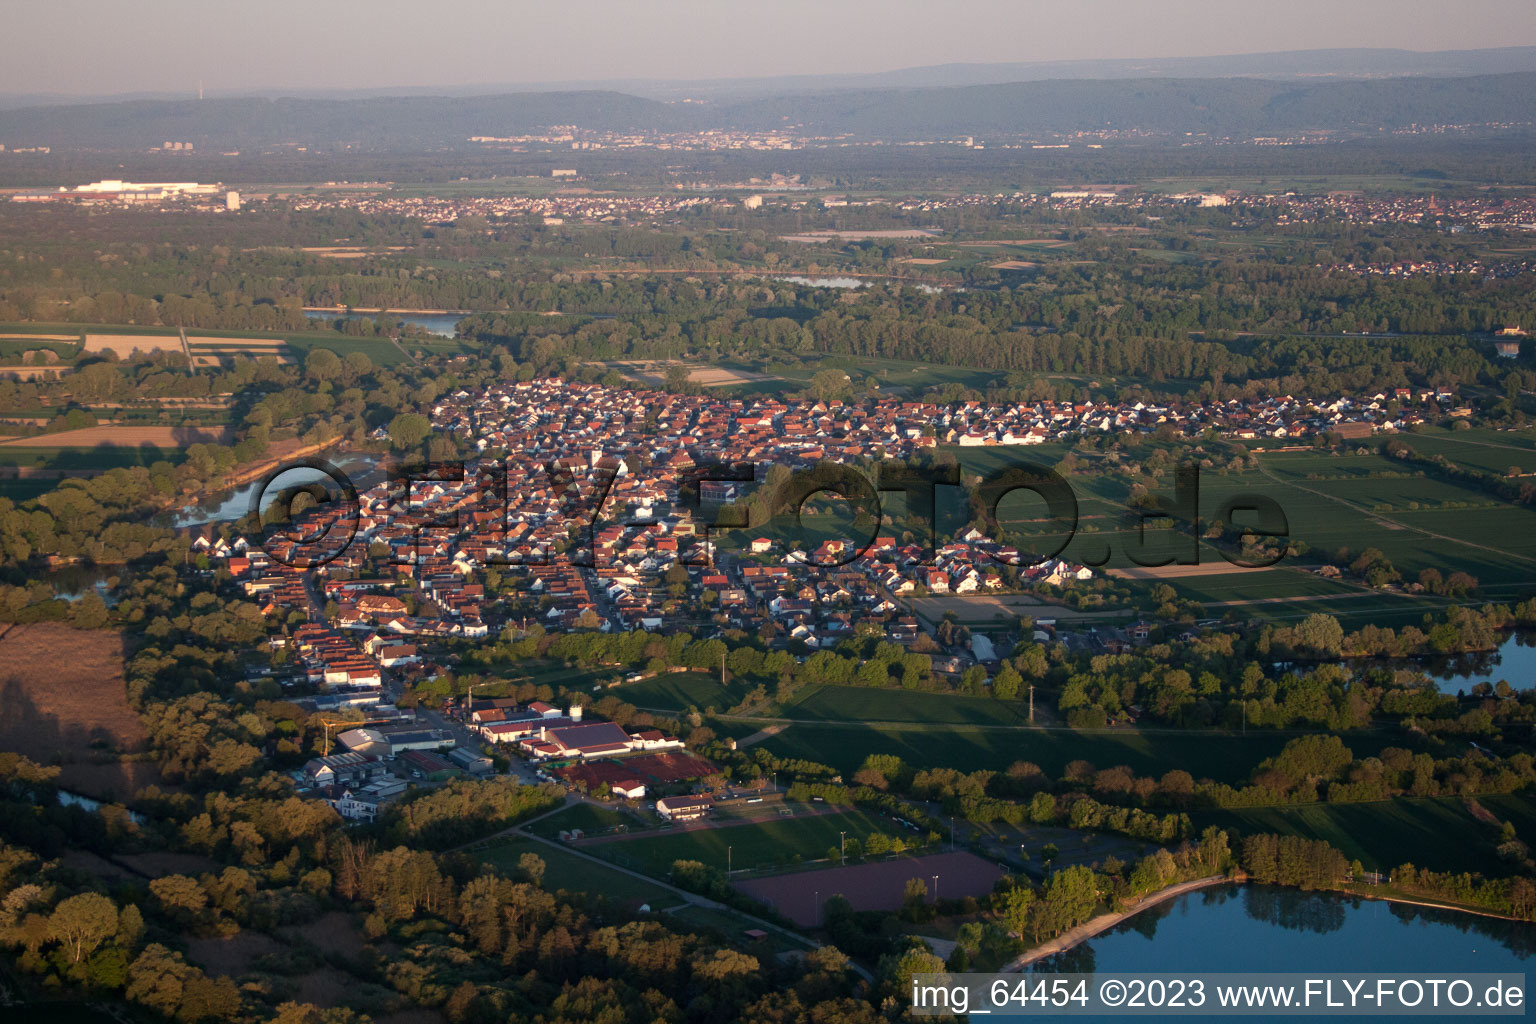 Bird's eye view of Neuburg in the state Rhineland-Palatinate, Germany